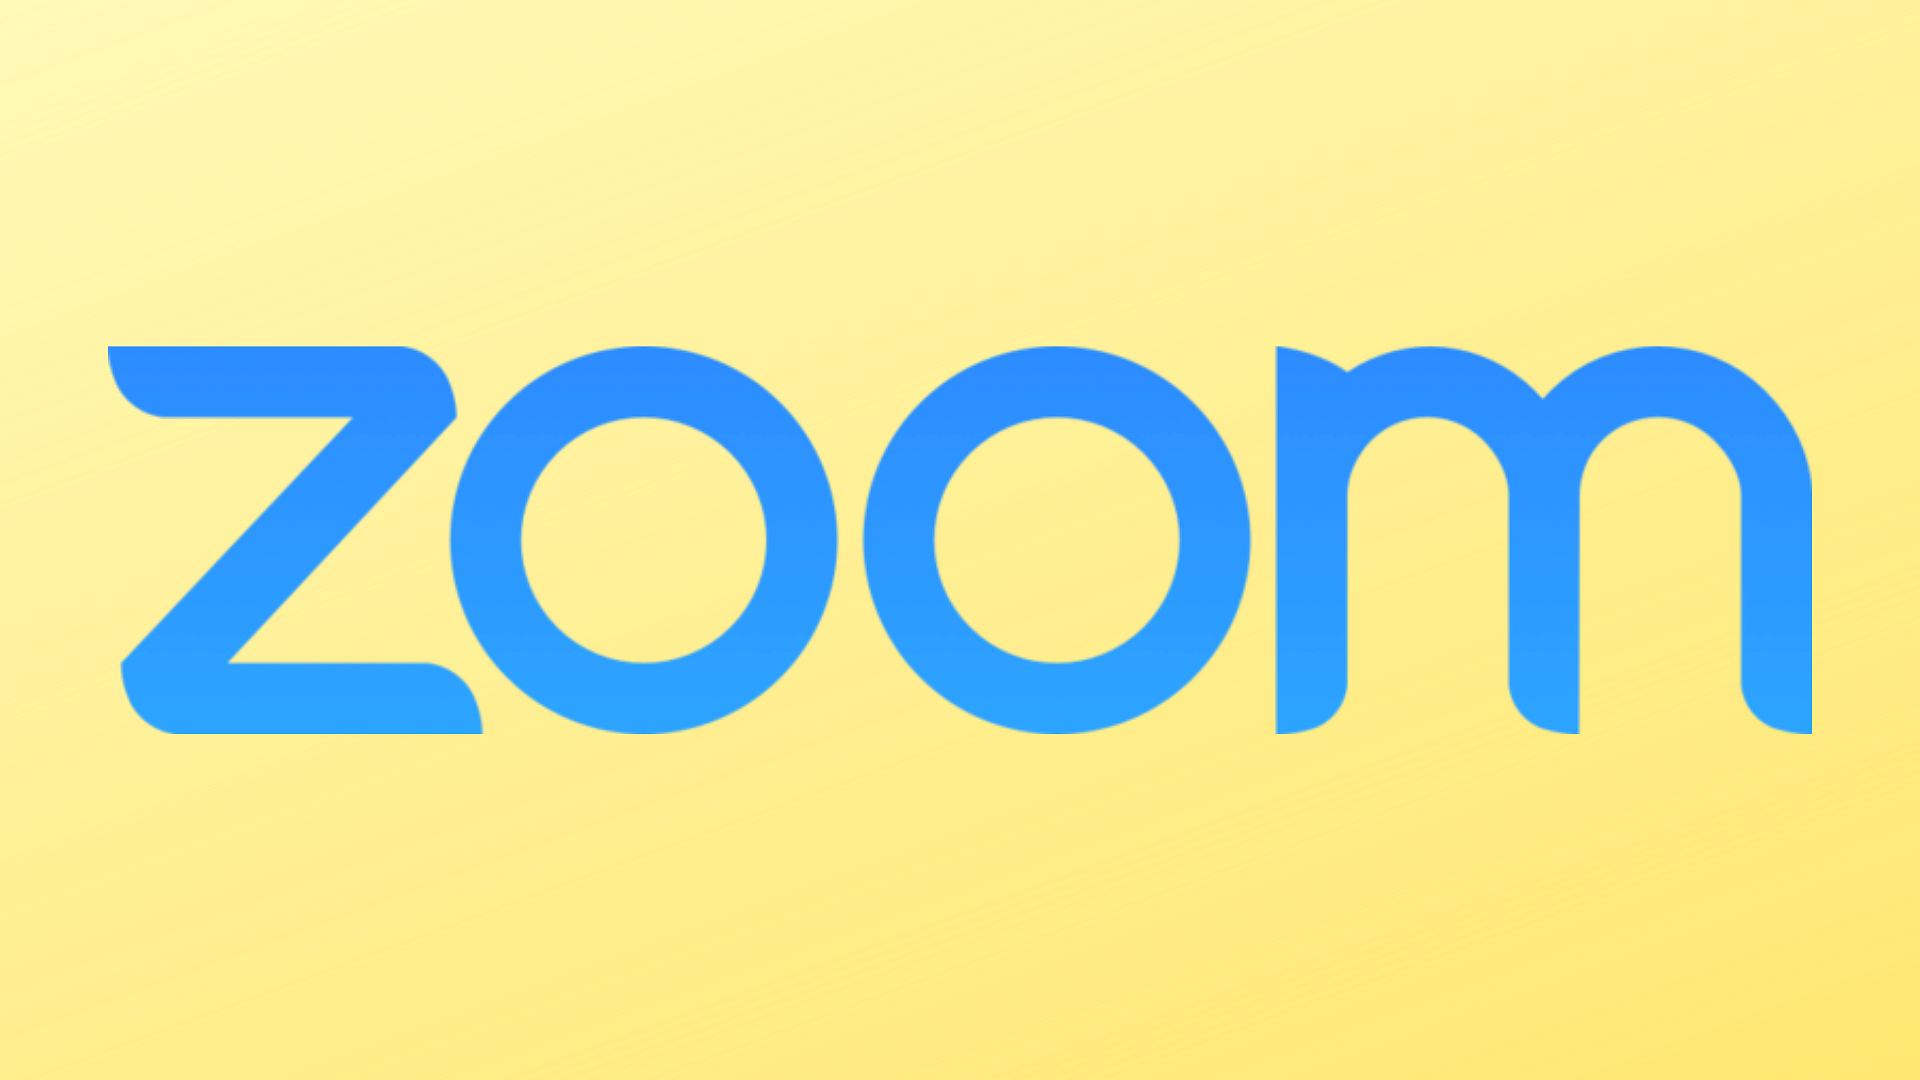 Bob zoom Logo Effects - YouTube